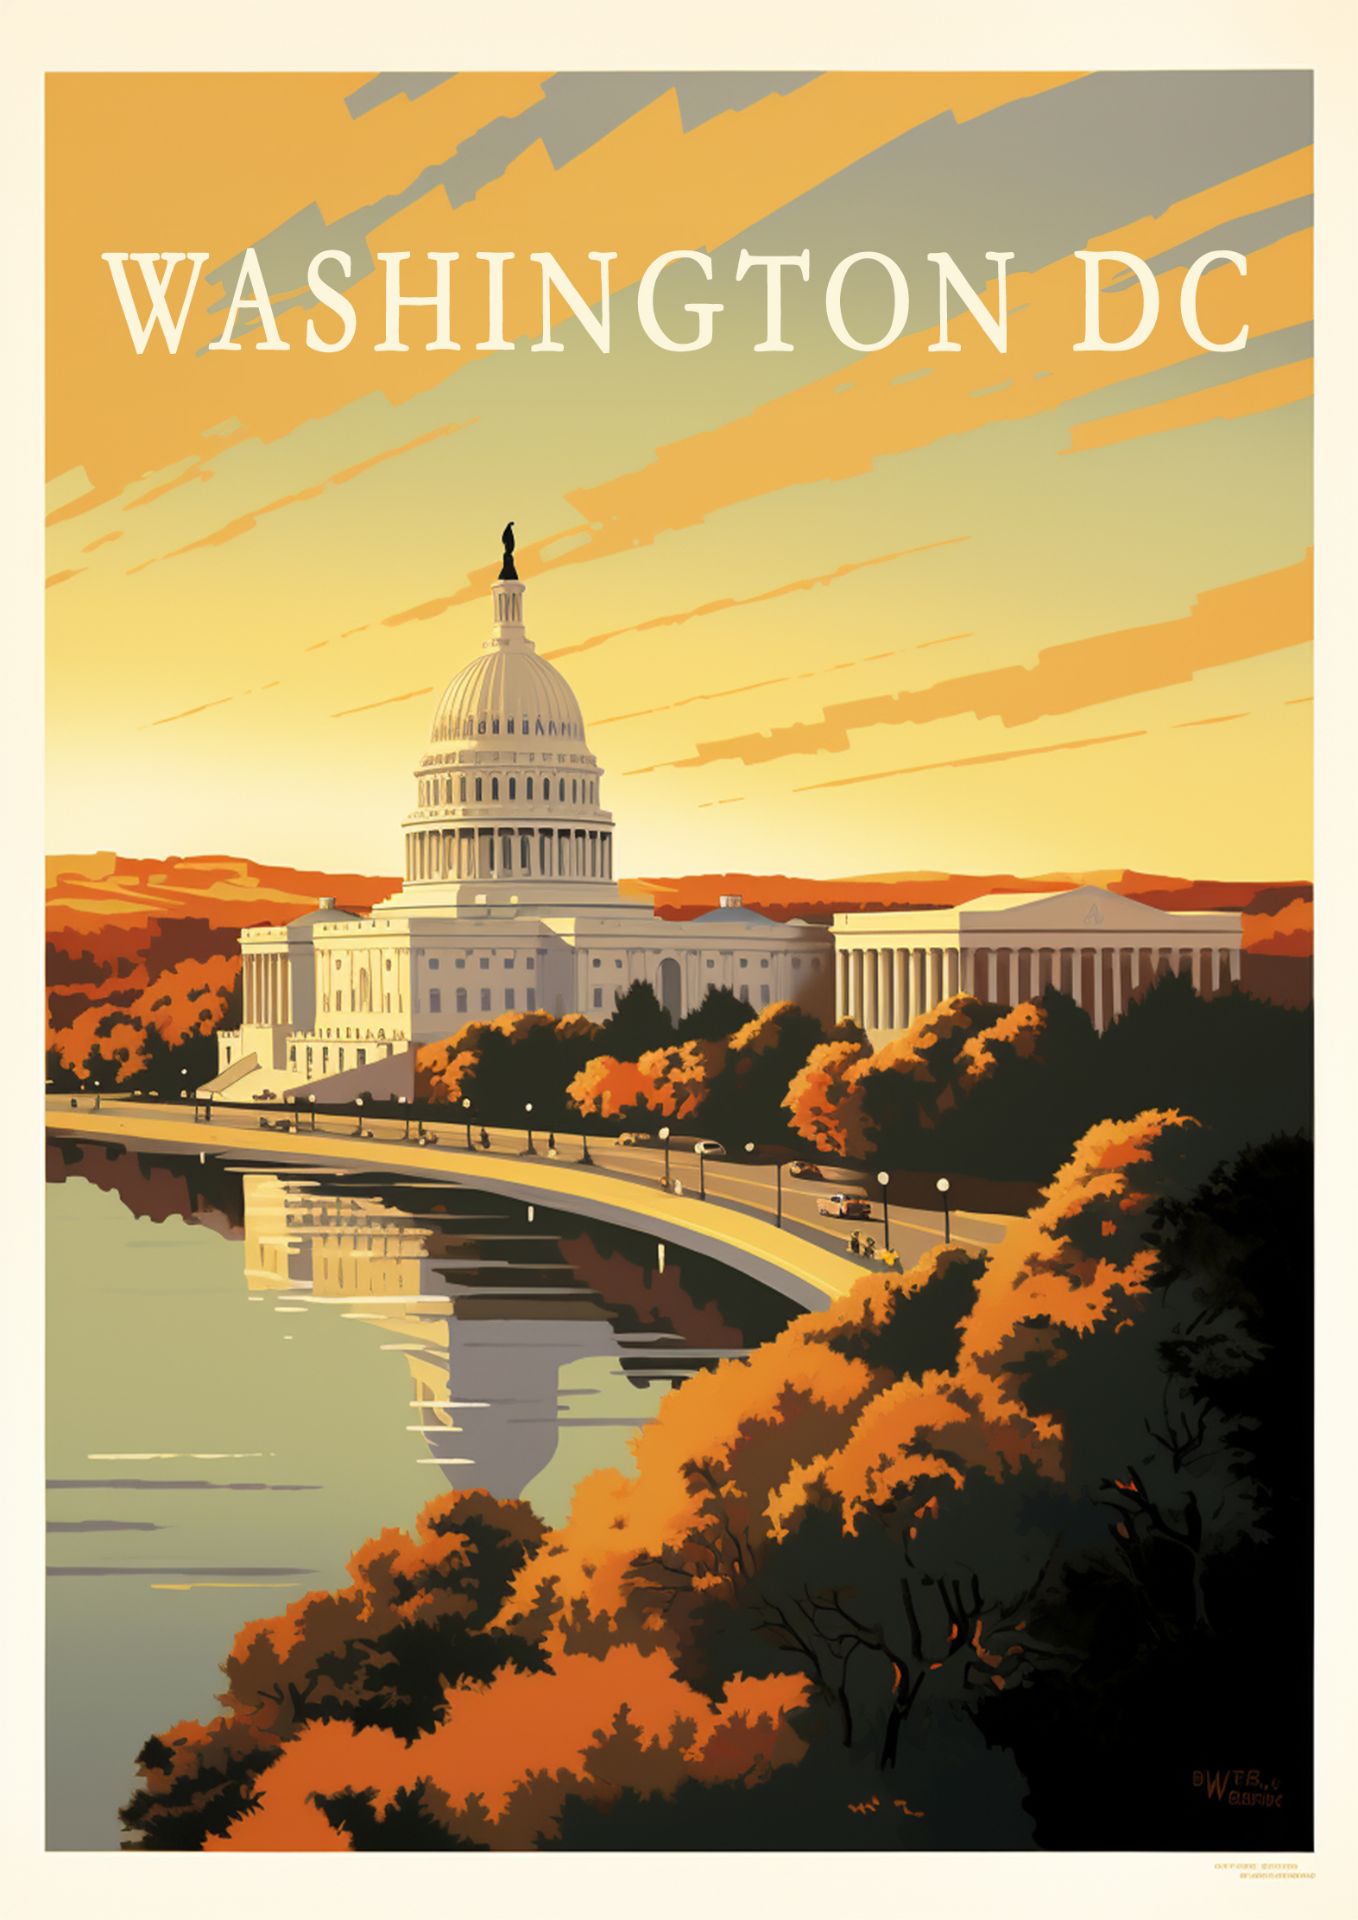 Washington D.C. Travel Poster